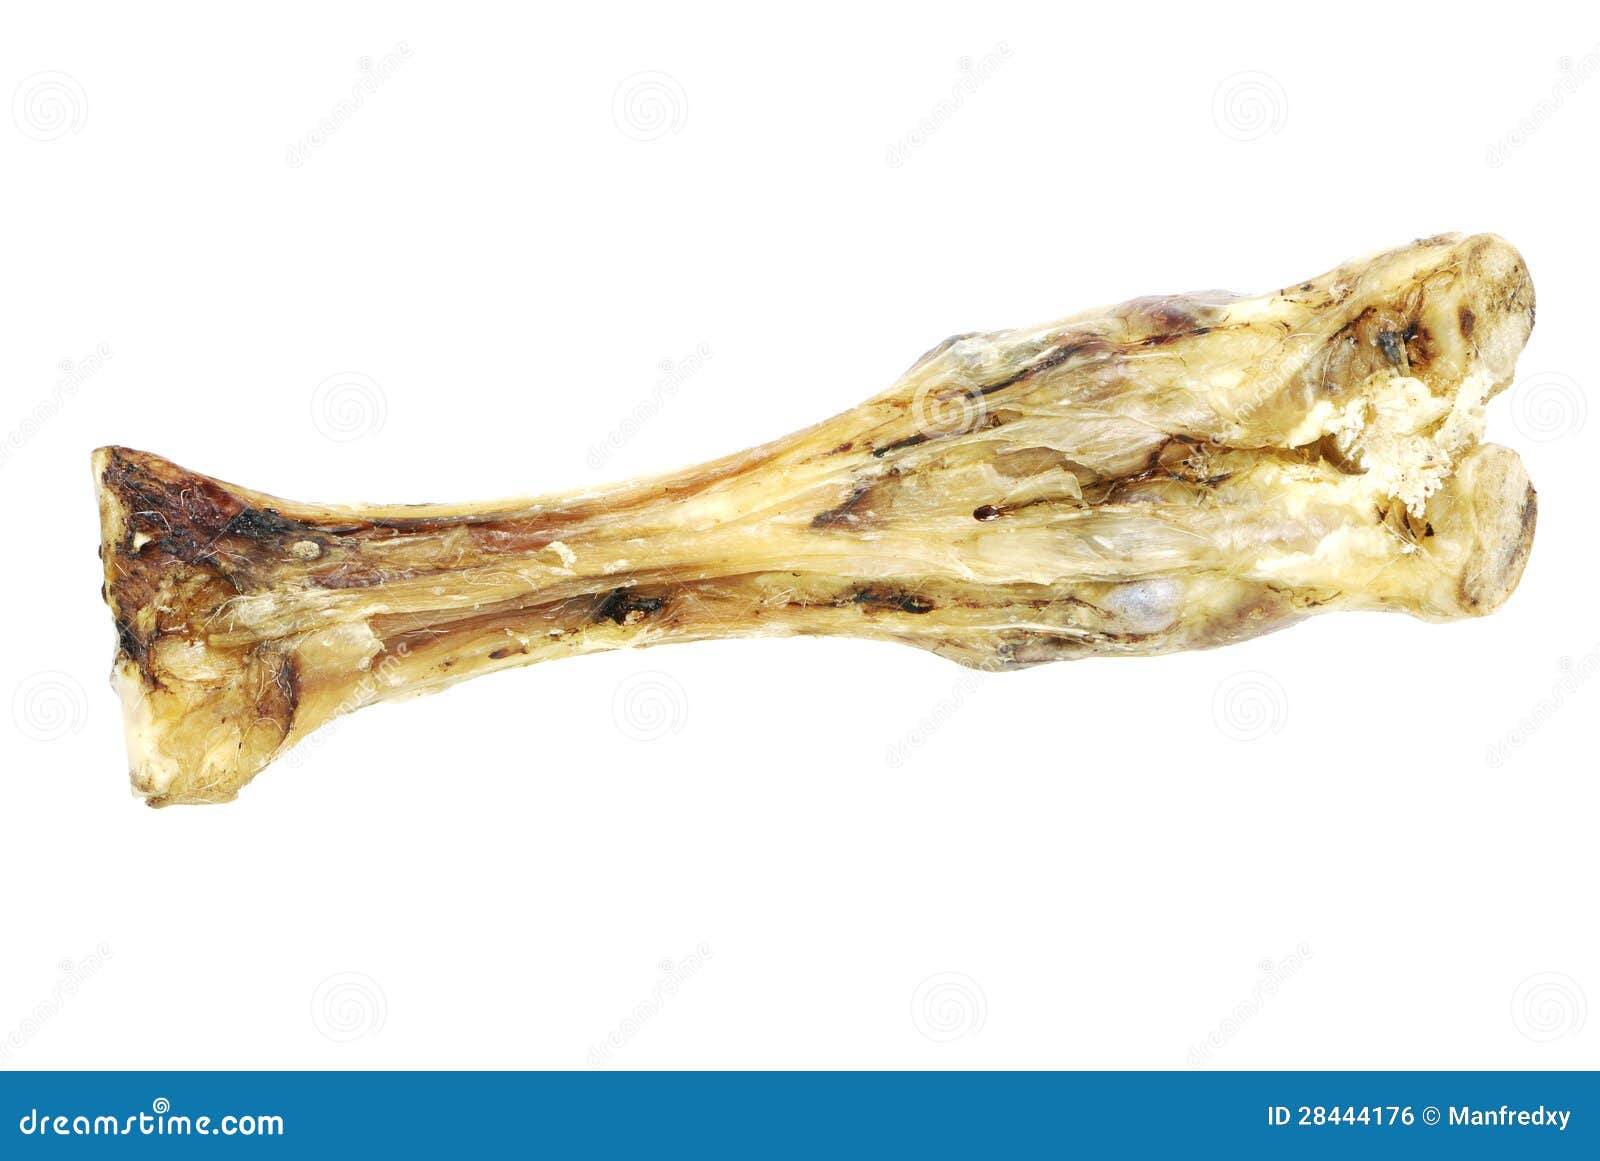 Animal Bone stock photo. Image of closeup, skeleton, bone - 28444176